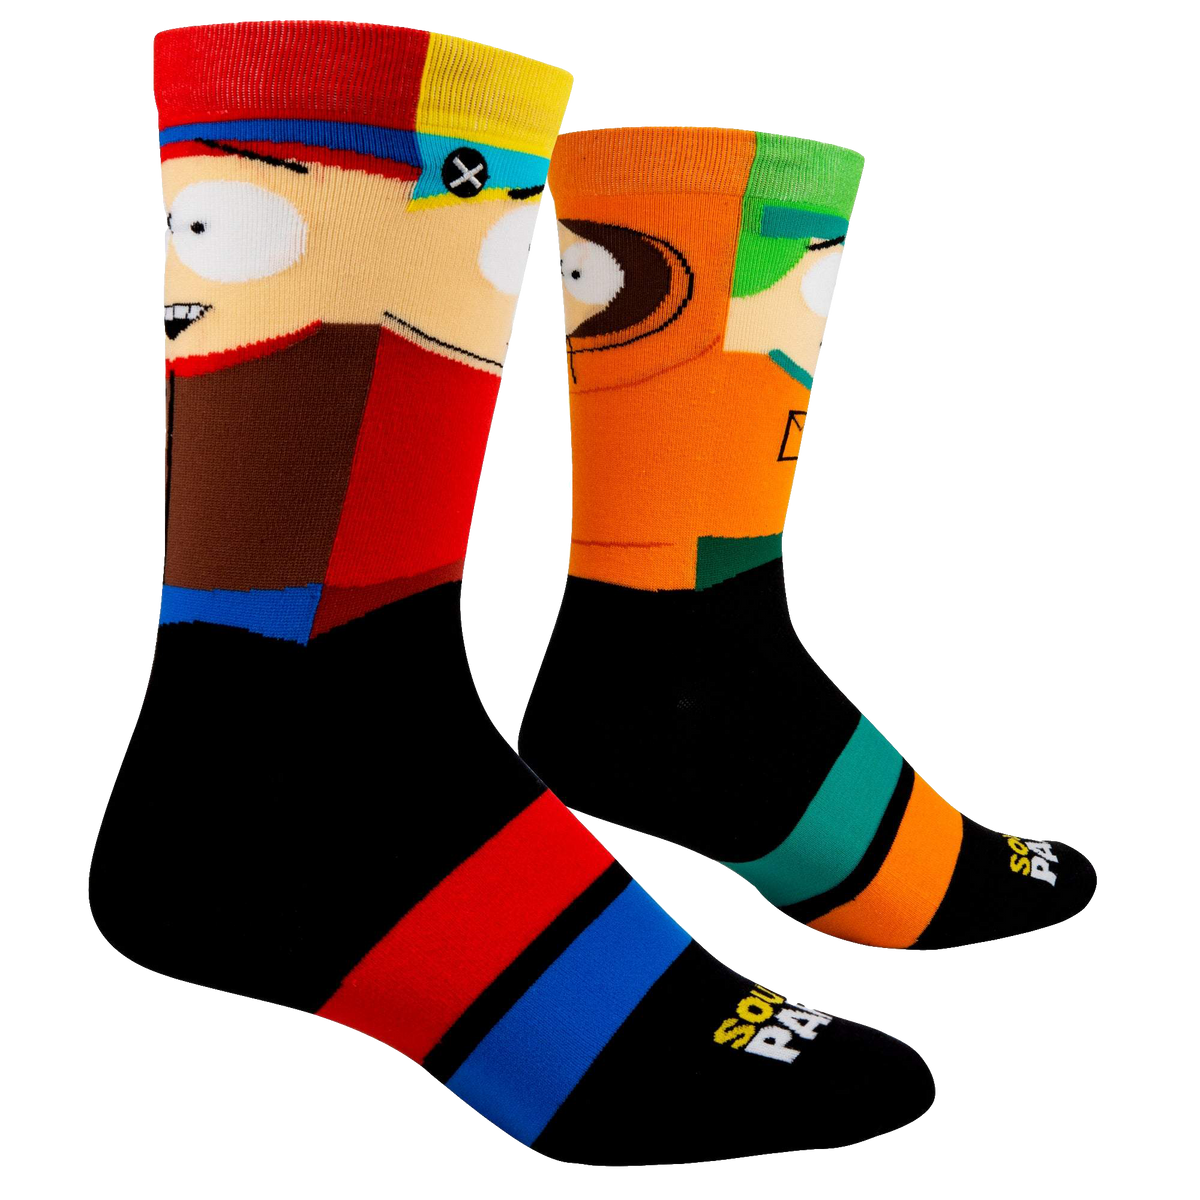 South Park Gang Socks